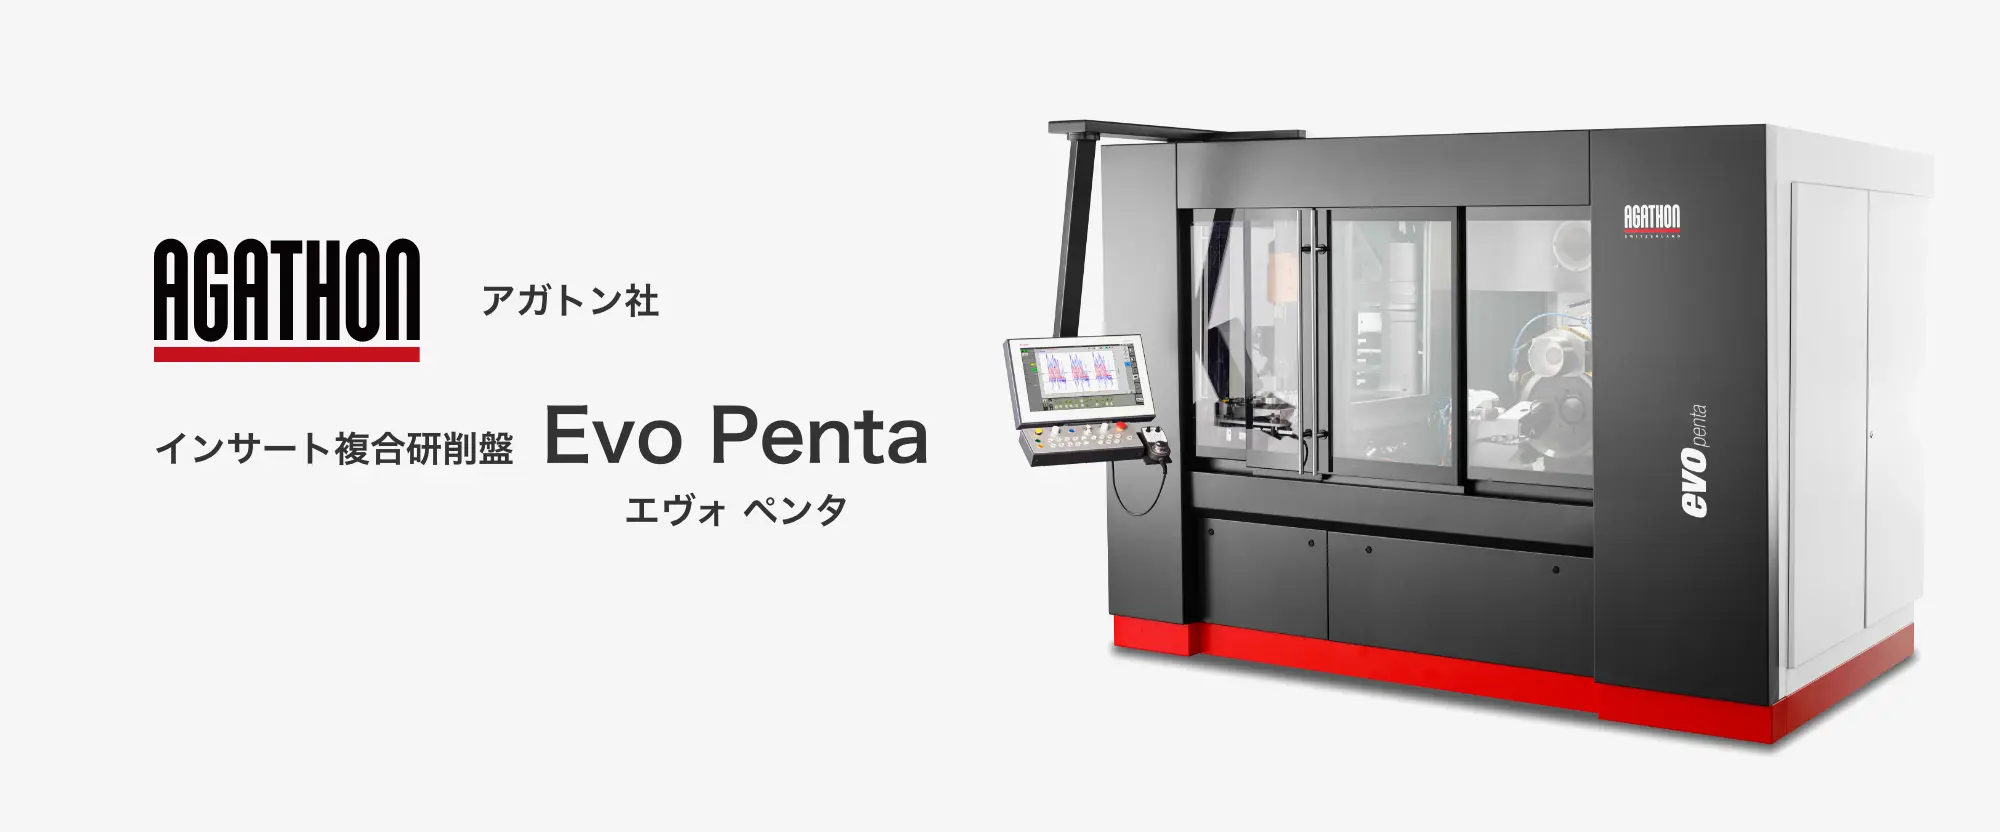 CNCインサート複合研削盤「Evo Penta」